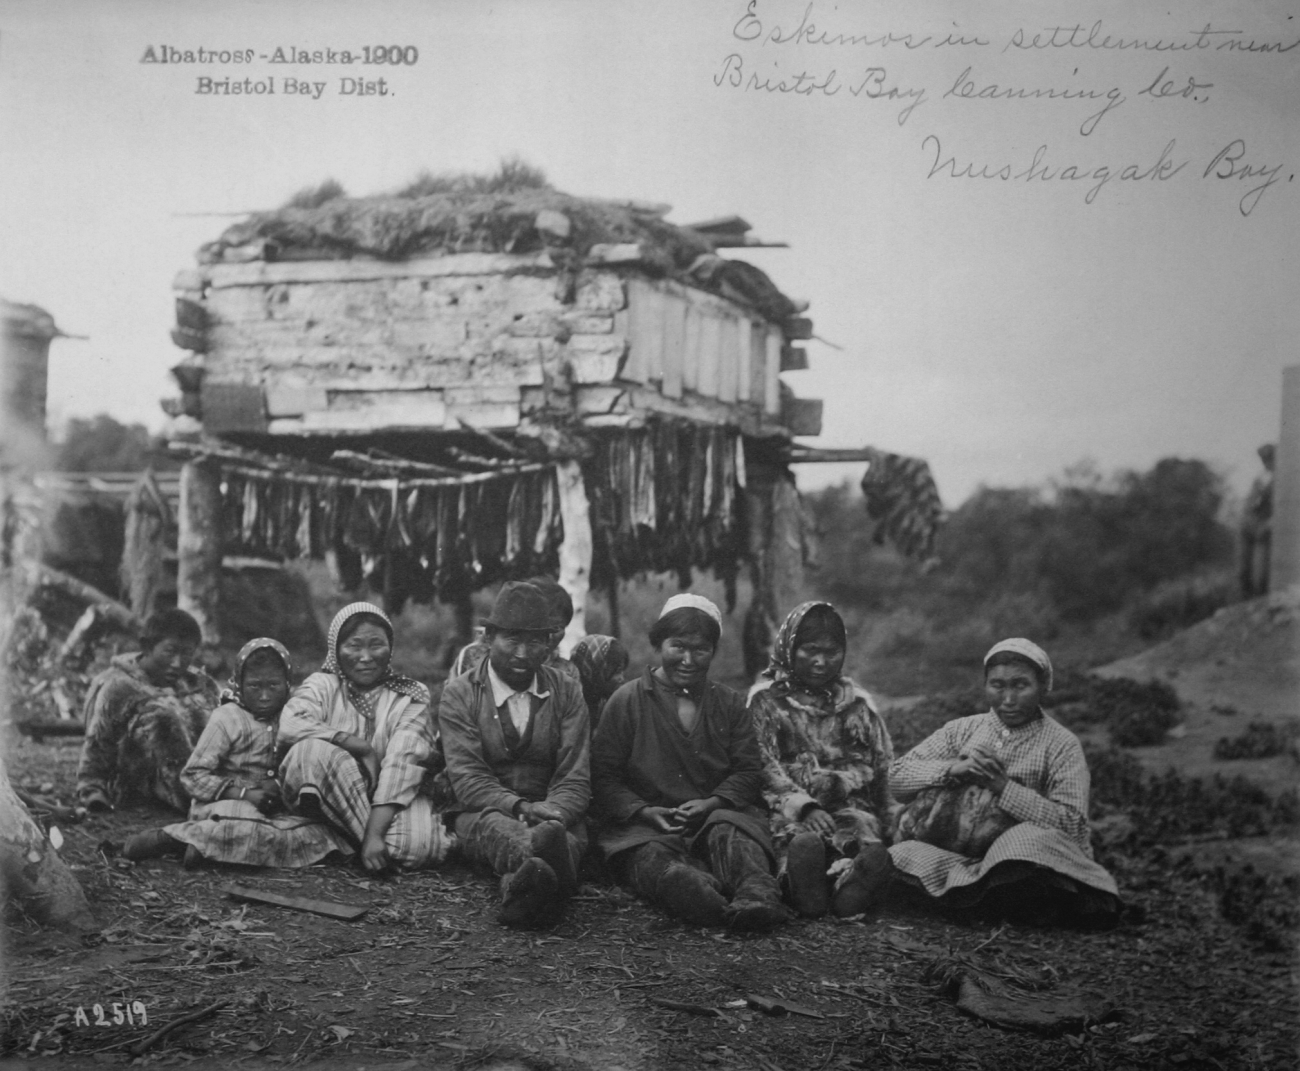 Albatross, AK, 1900, Bristol Bay district, Eskimoes in settlementnear Bristol Bay Canning Co